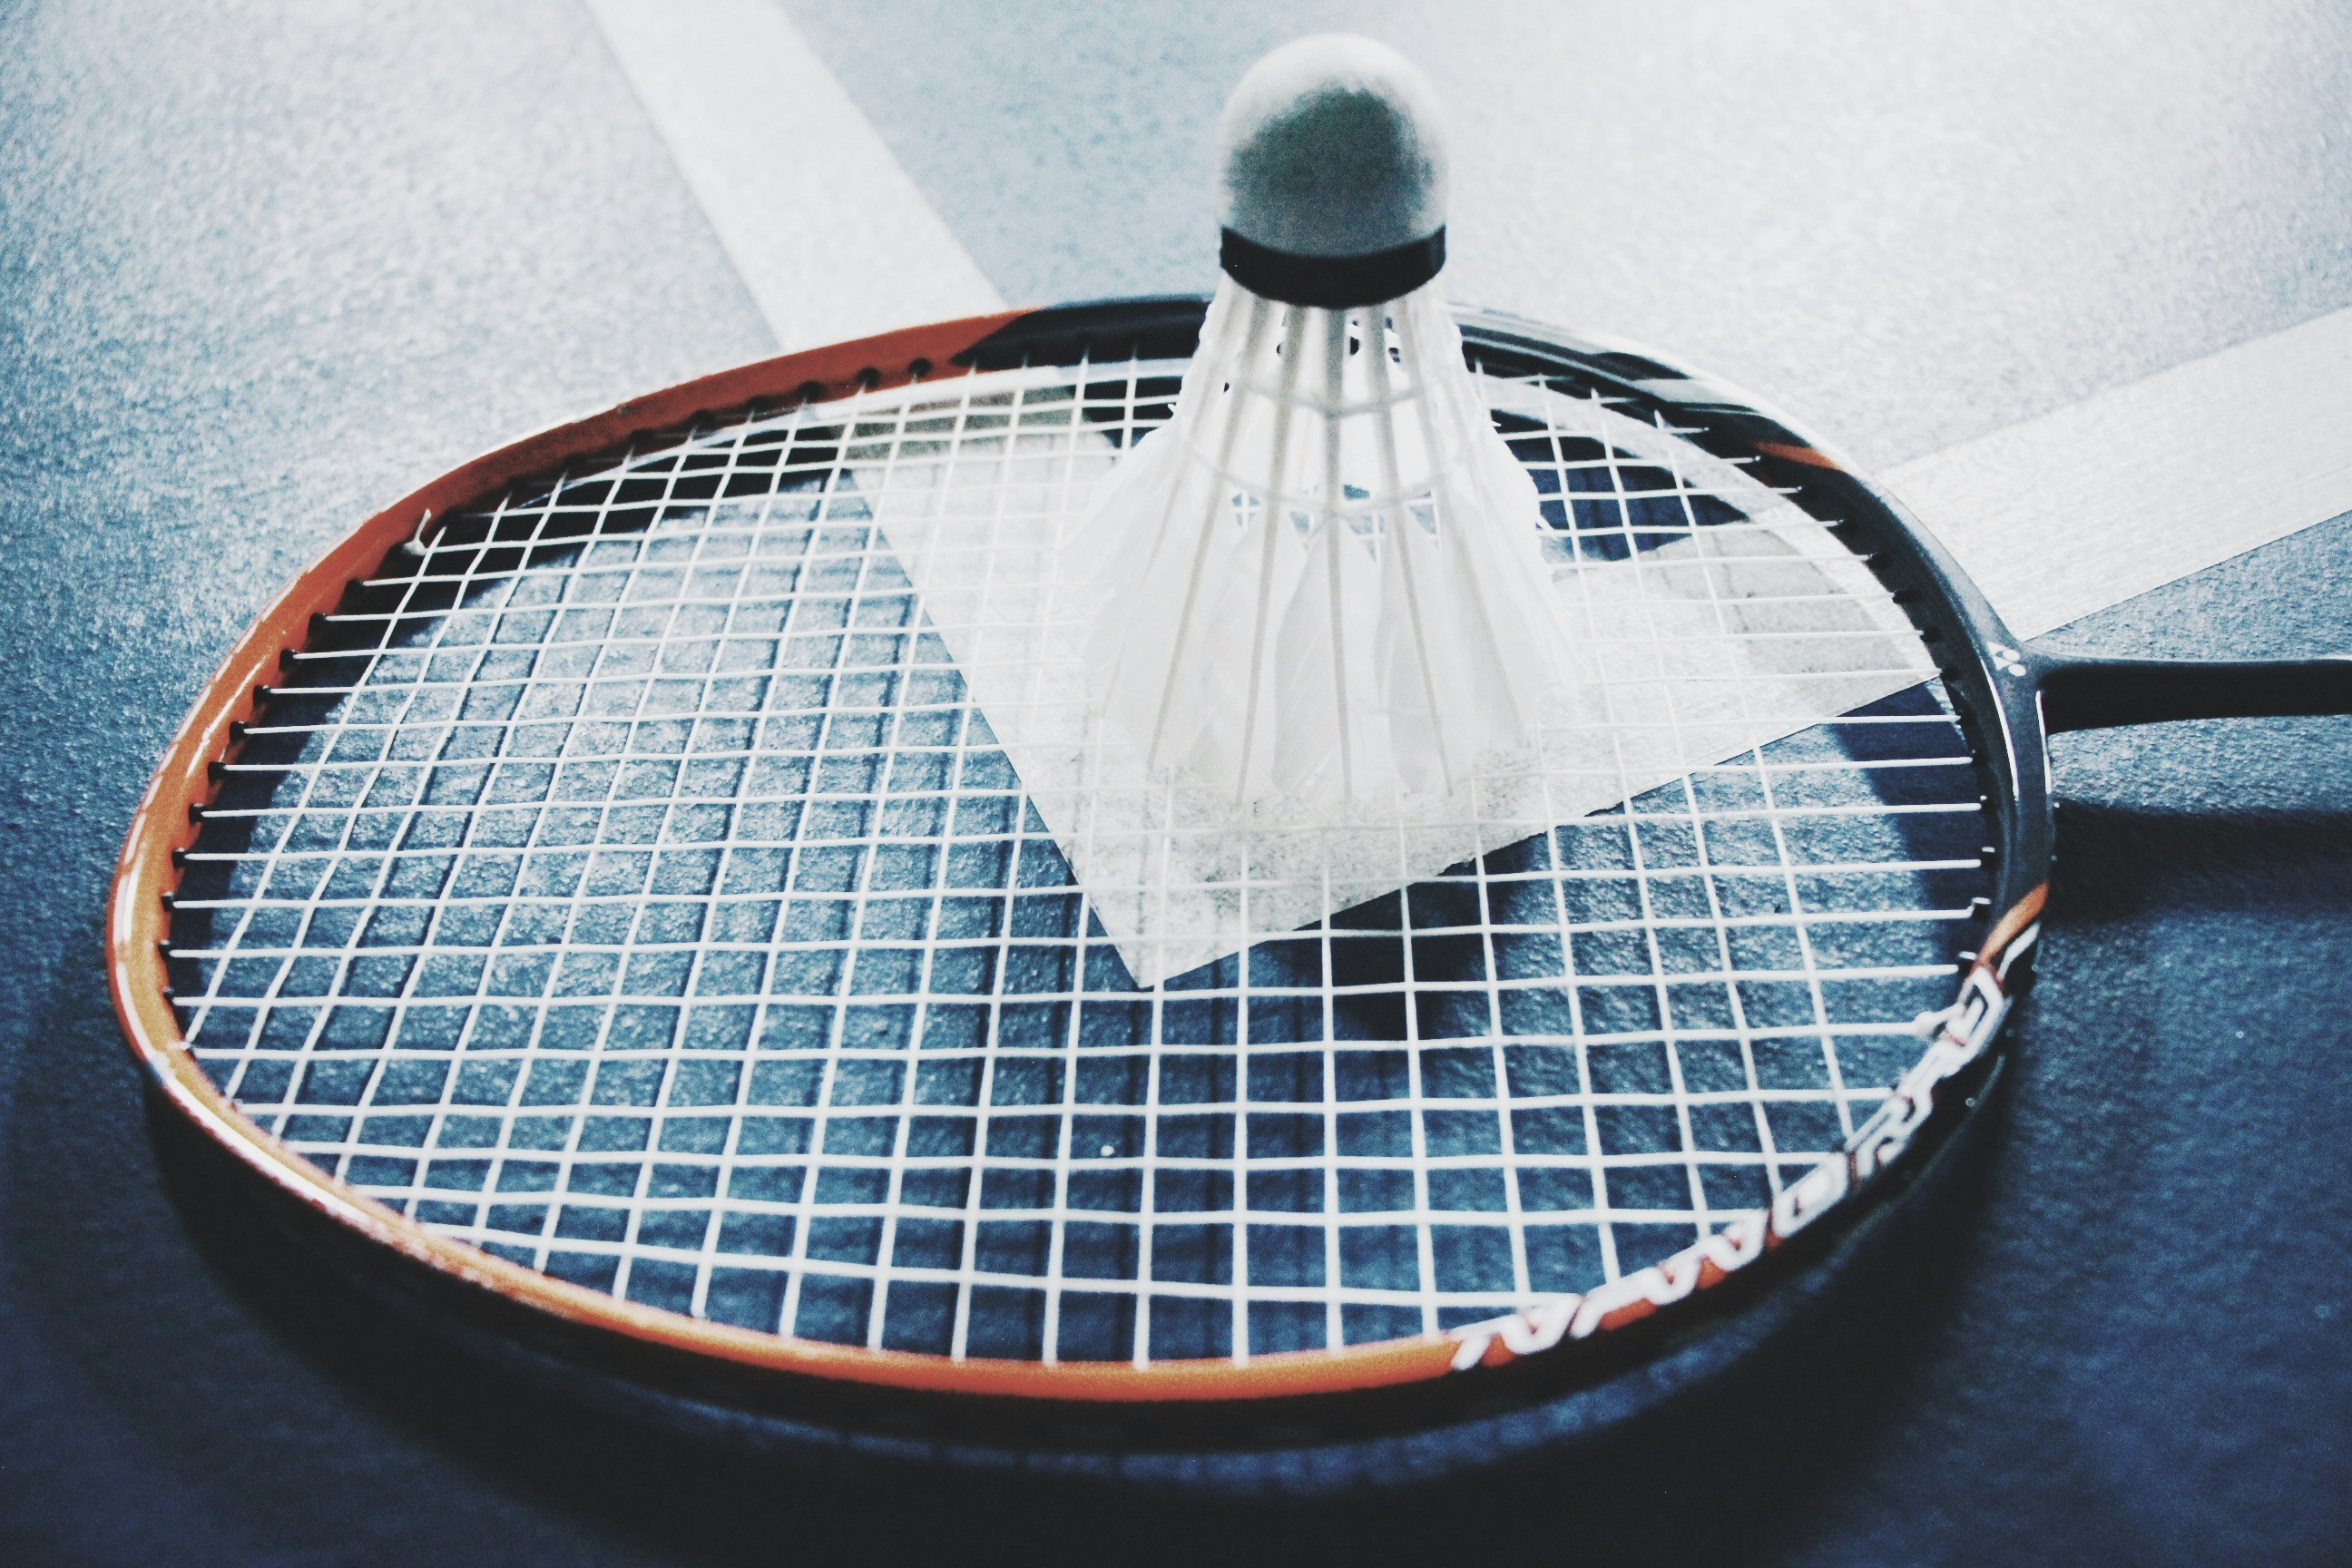 Badminton equipment lying on a court.